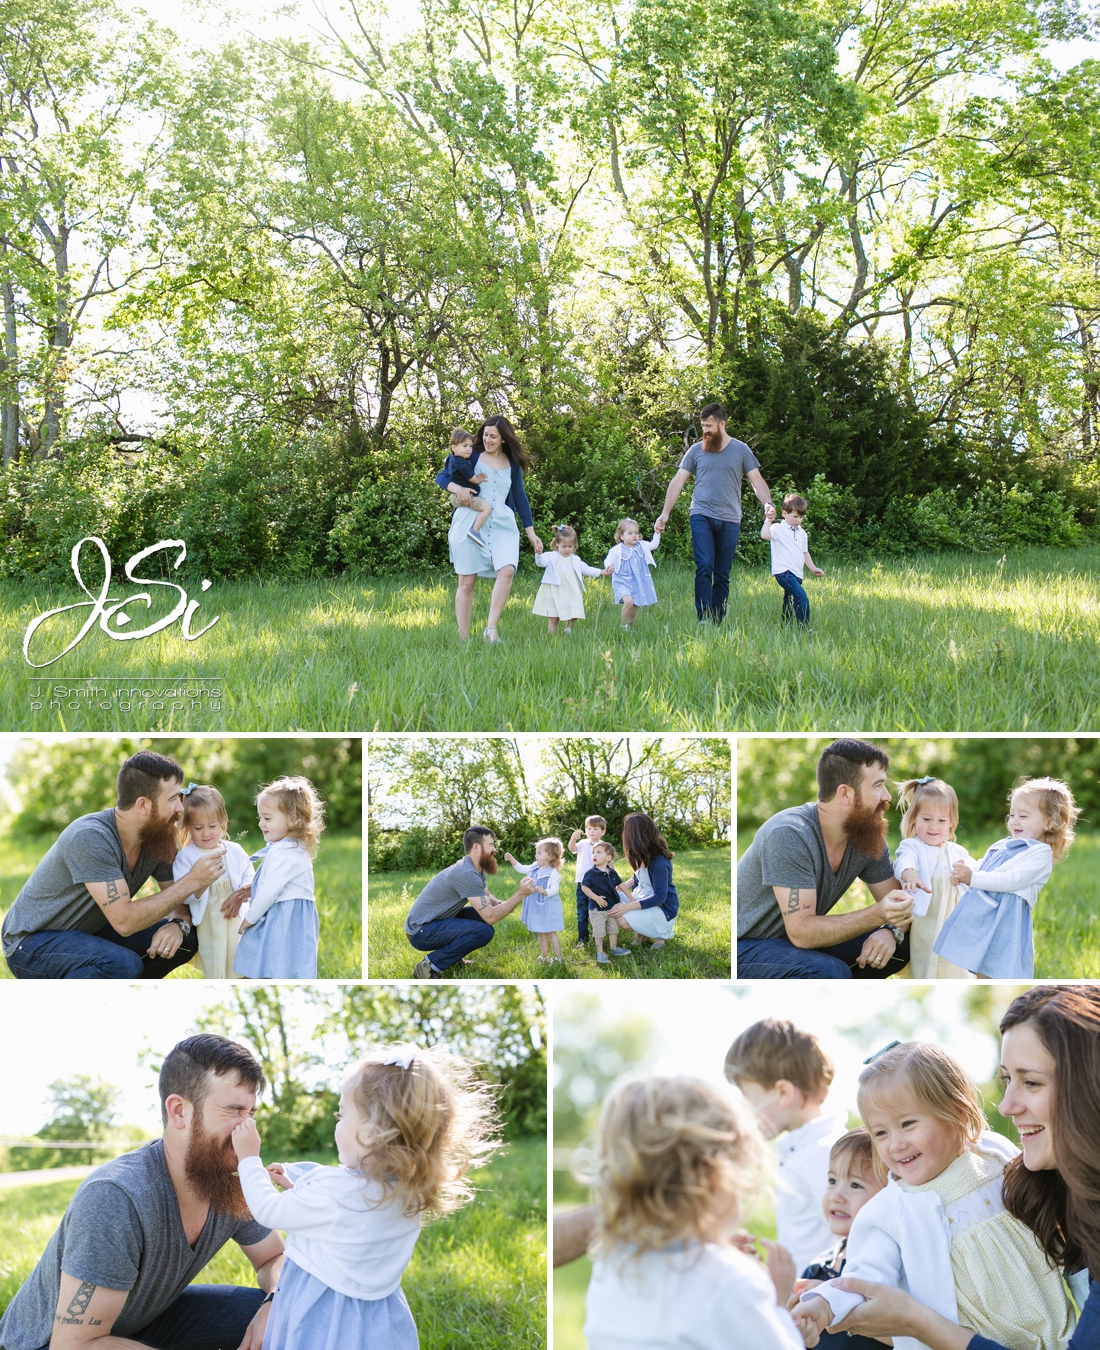 Kansas City authentic fun candid family outdoor portrait session photo